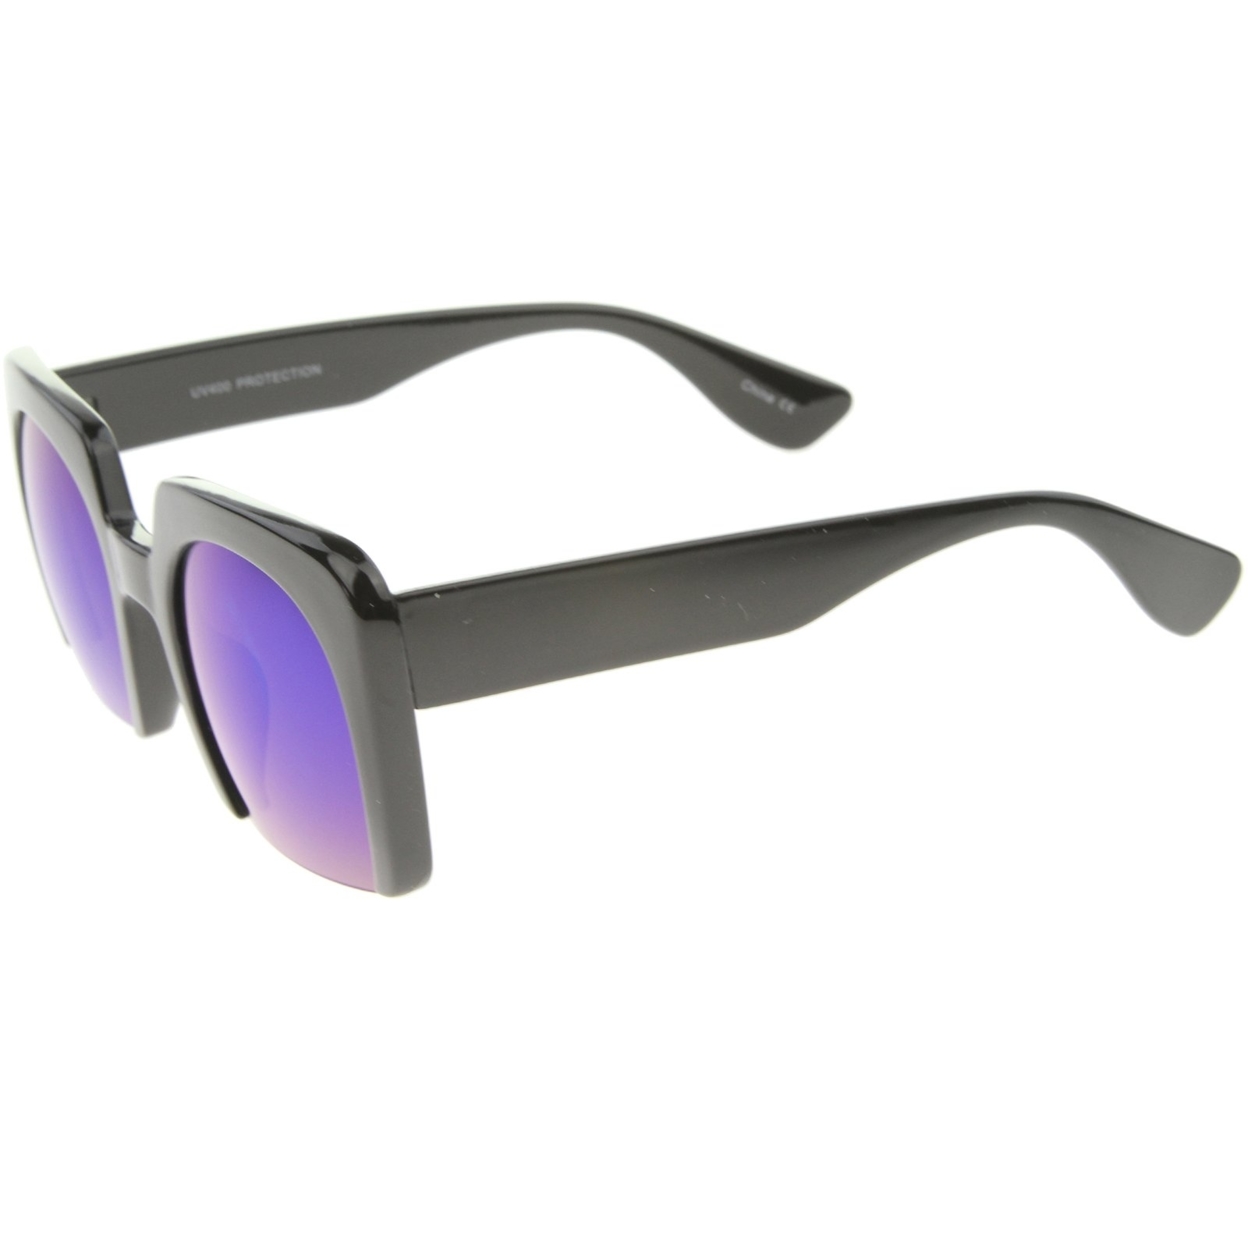 Women's High Fashion Bold Bottom Cut Square Mirrored Lens Sunglasses 52mm - Brown Tortoise / Green Blue Mirror